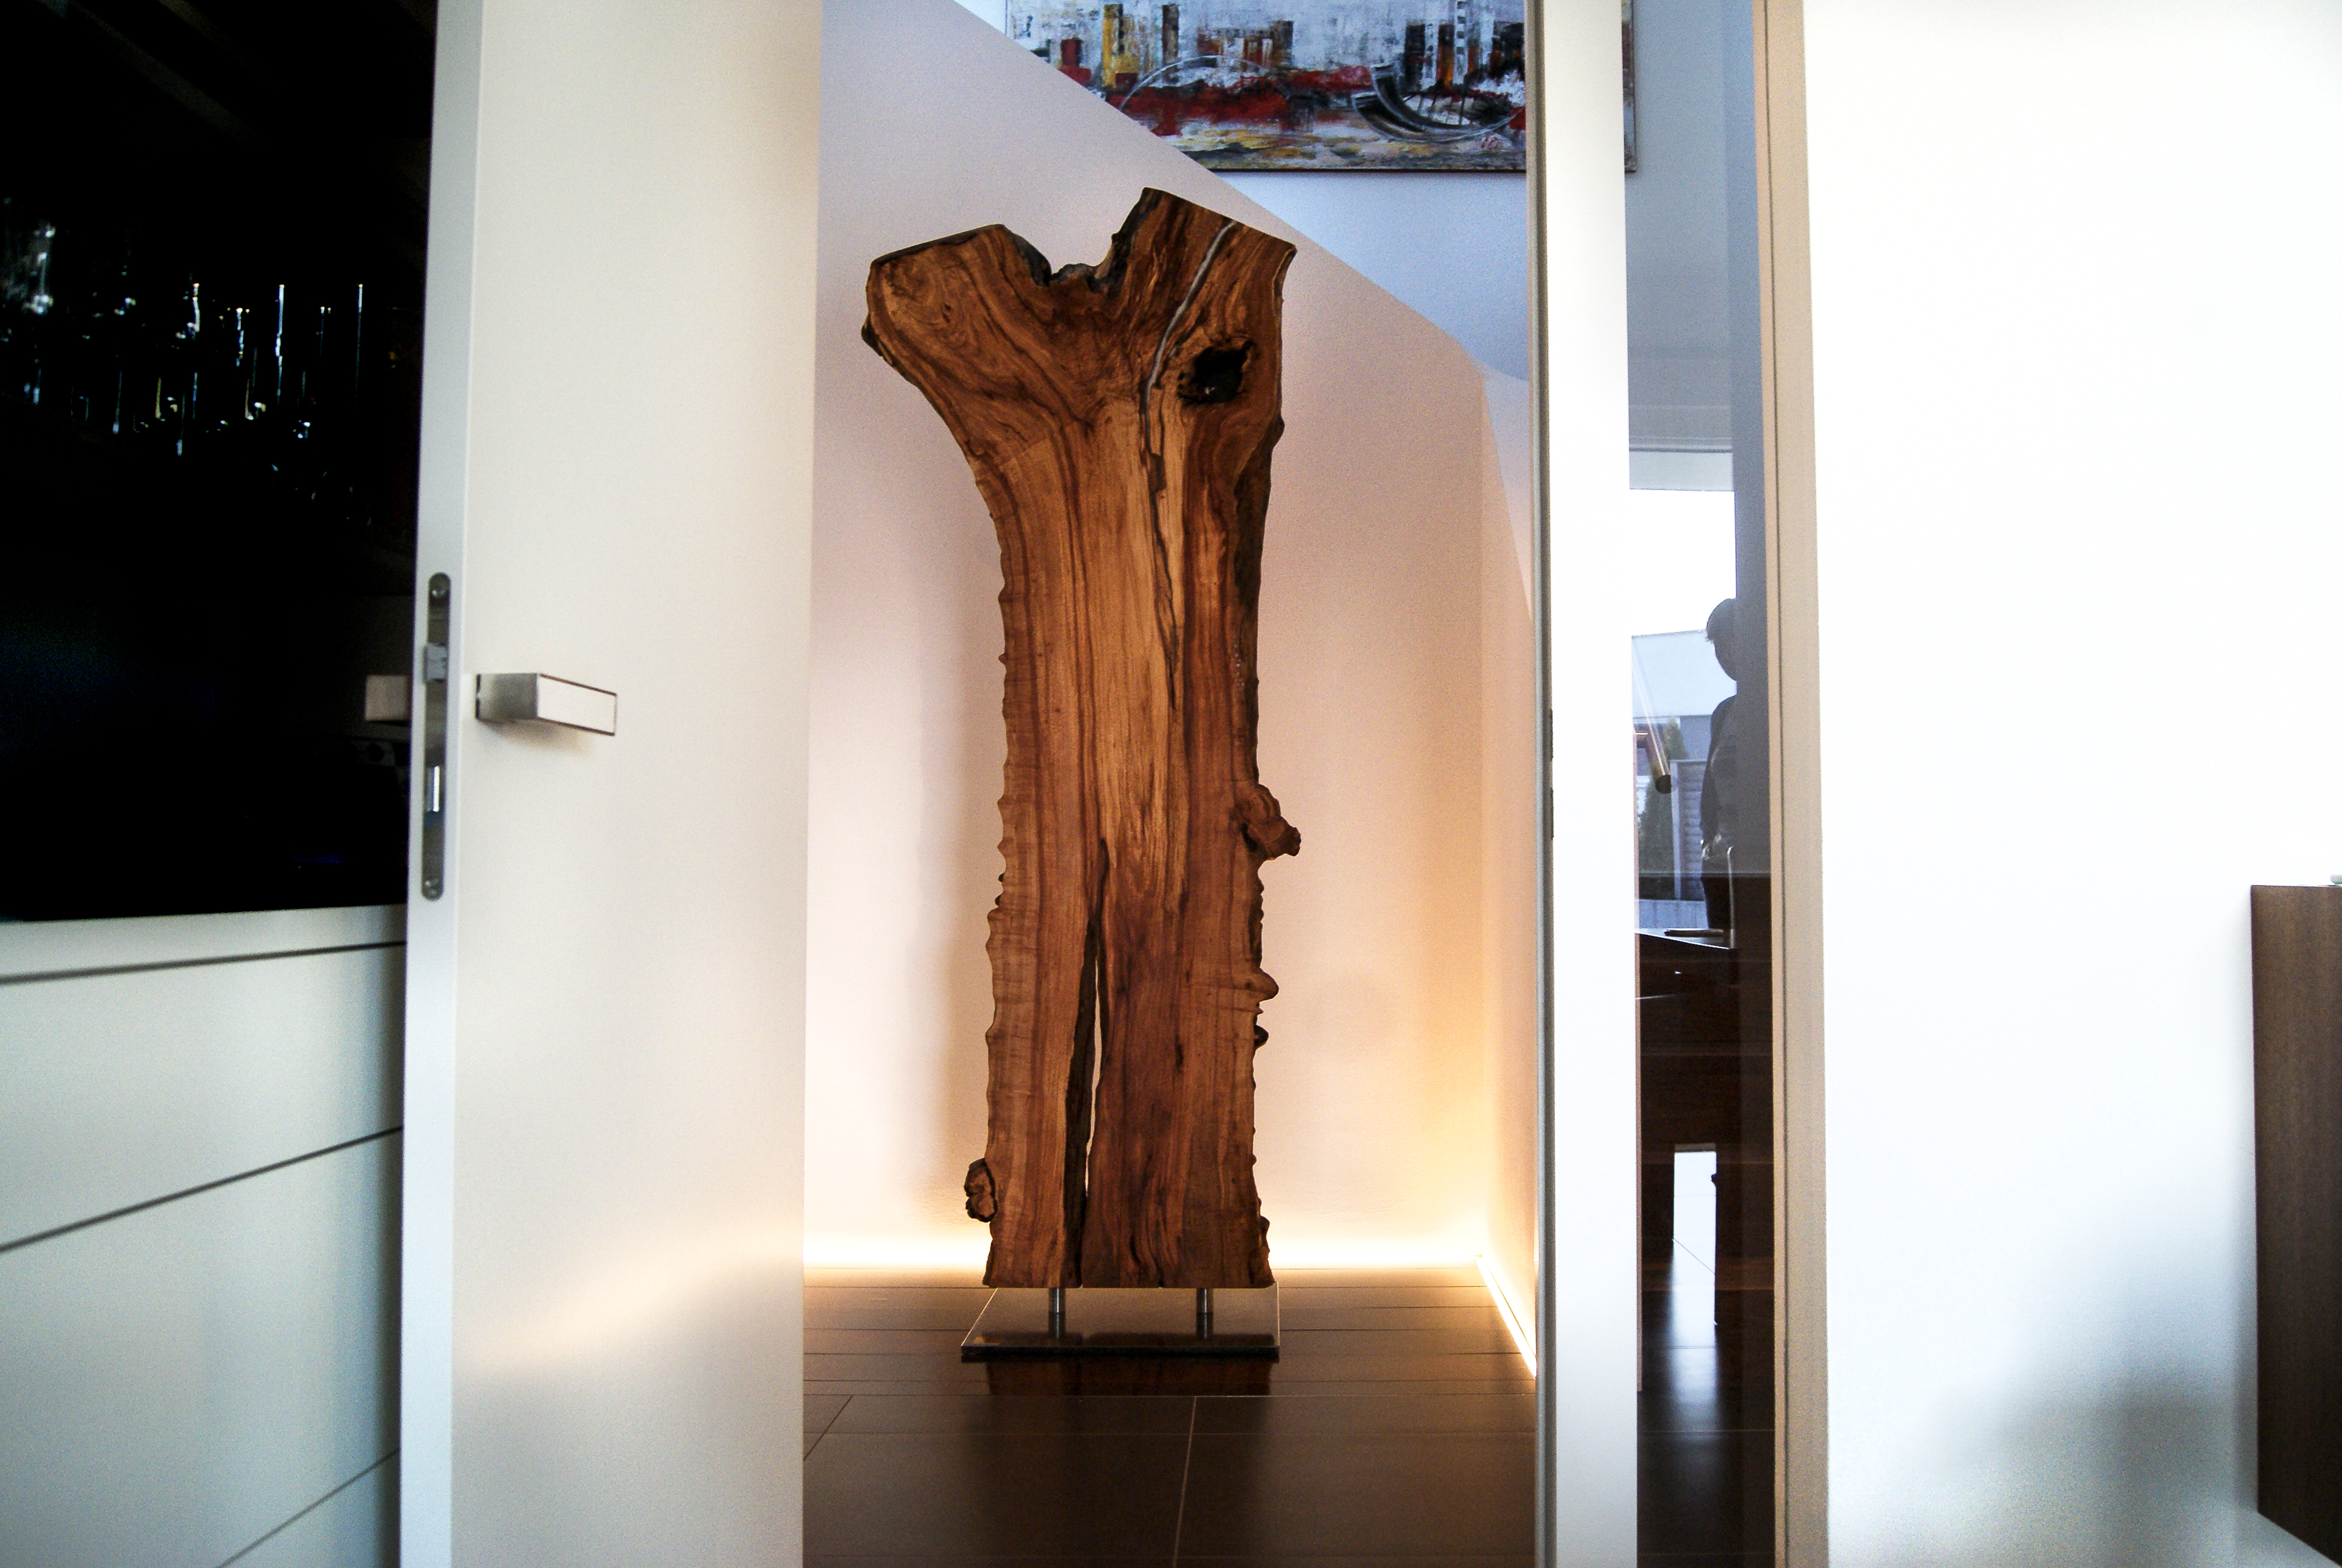 Escultura de madera de un tronco de árbol